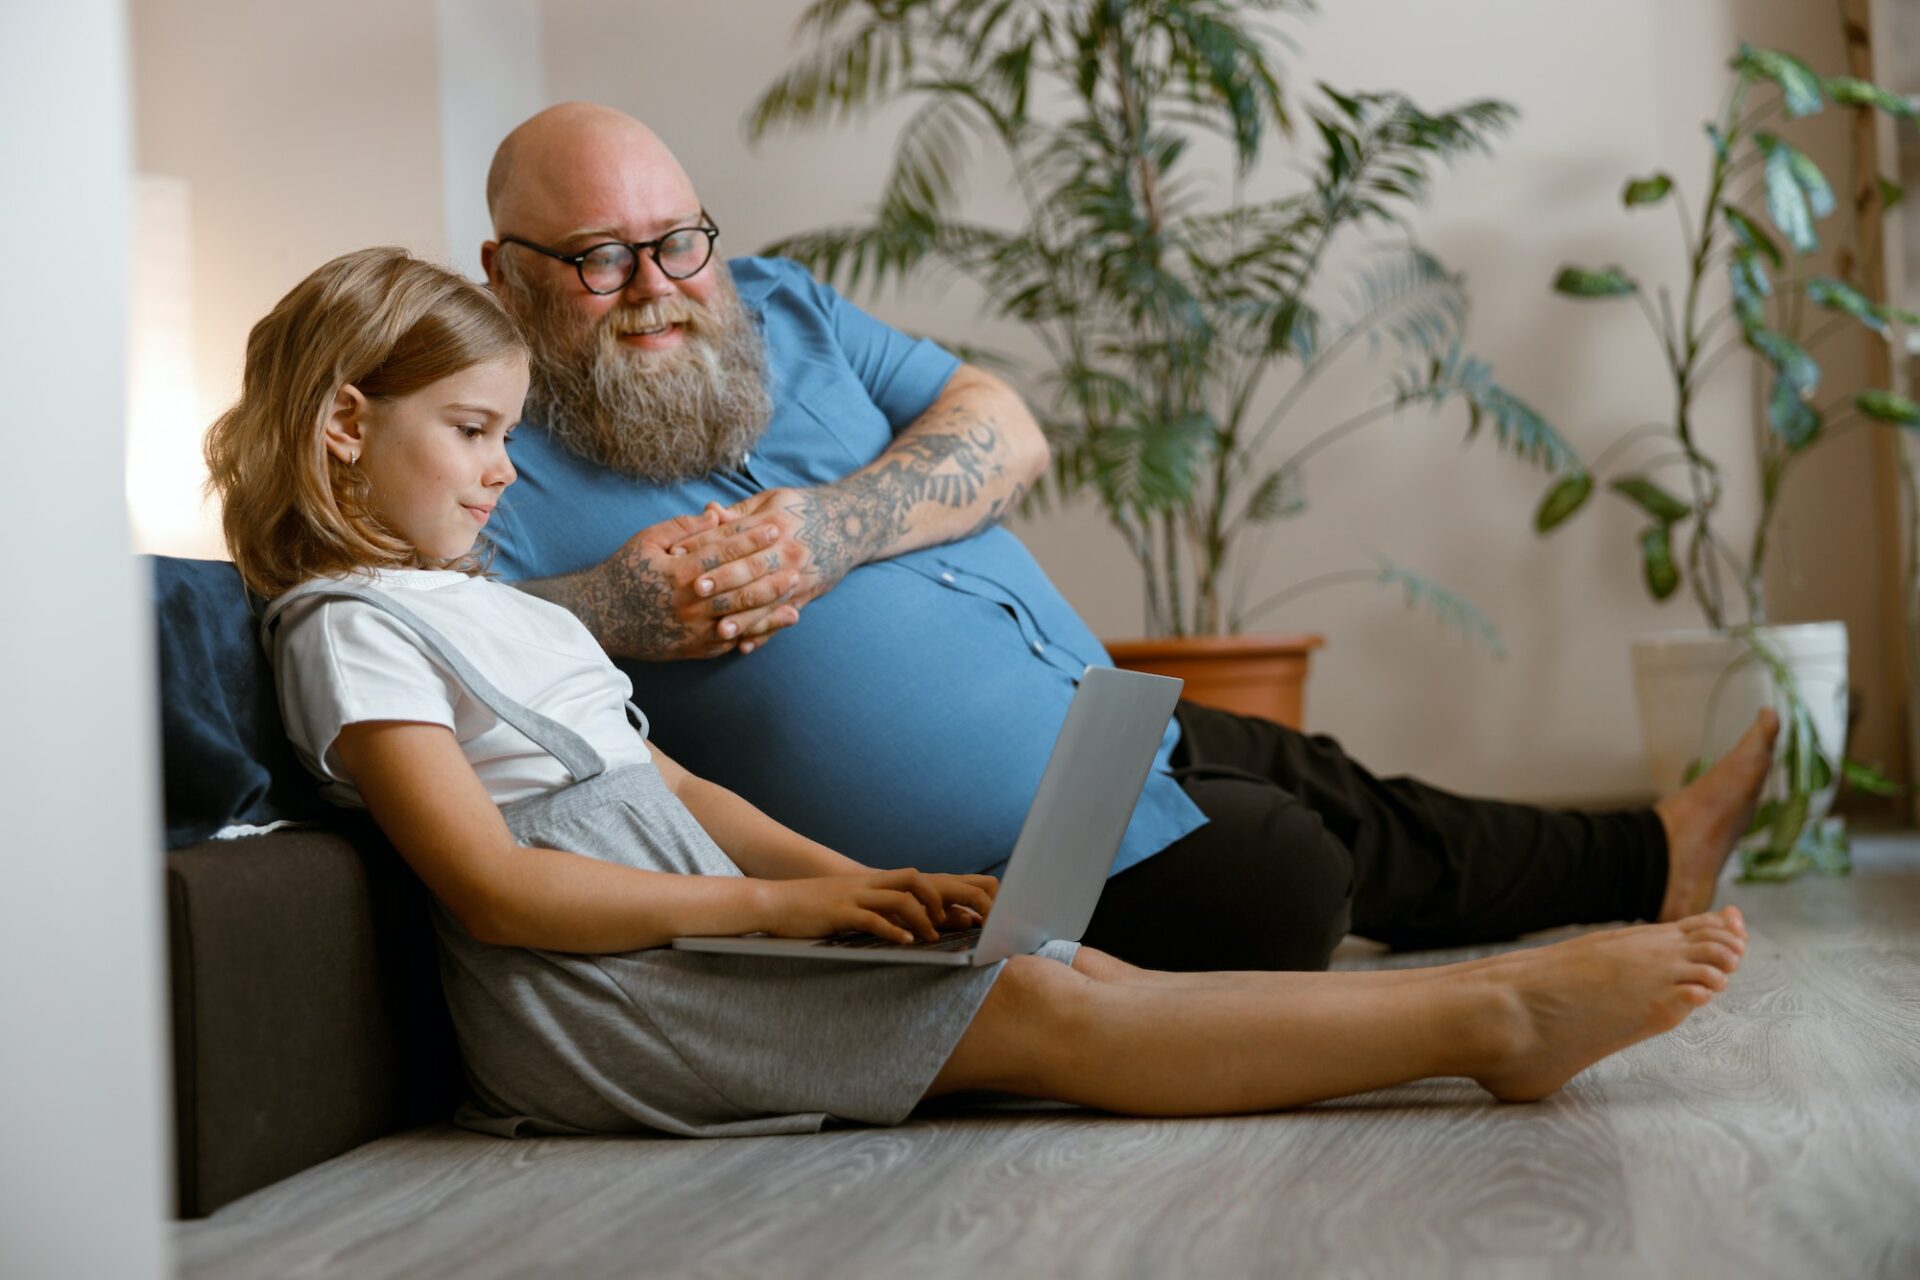 Smiling dad and cute girl watch video via laptop sitting on floor in bedroom